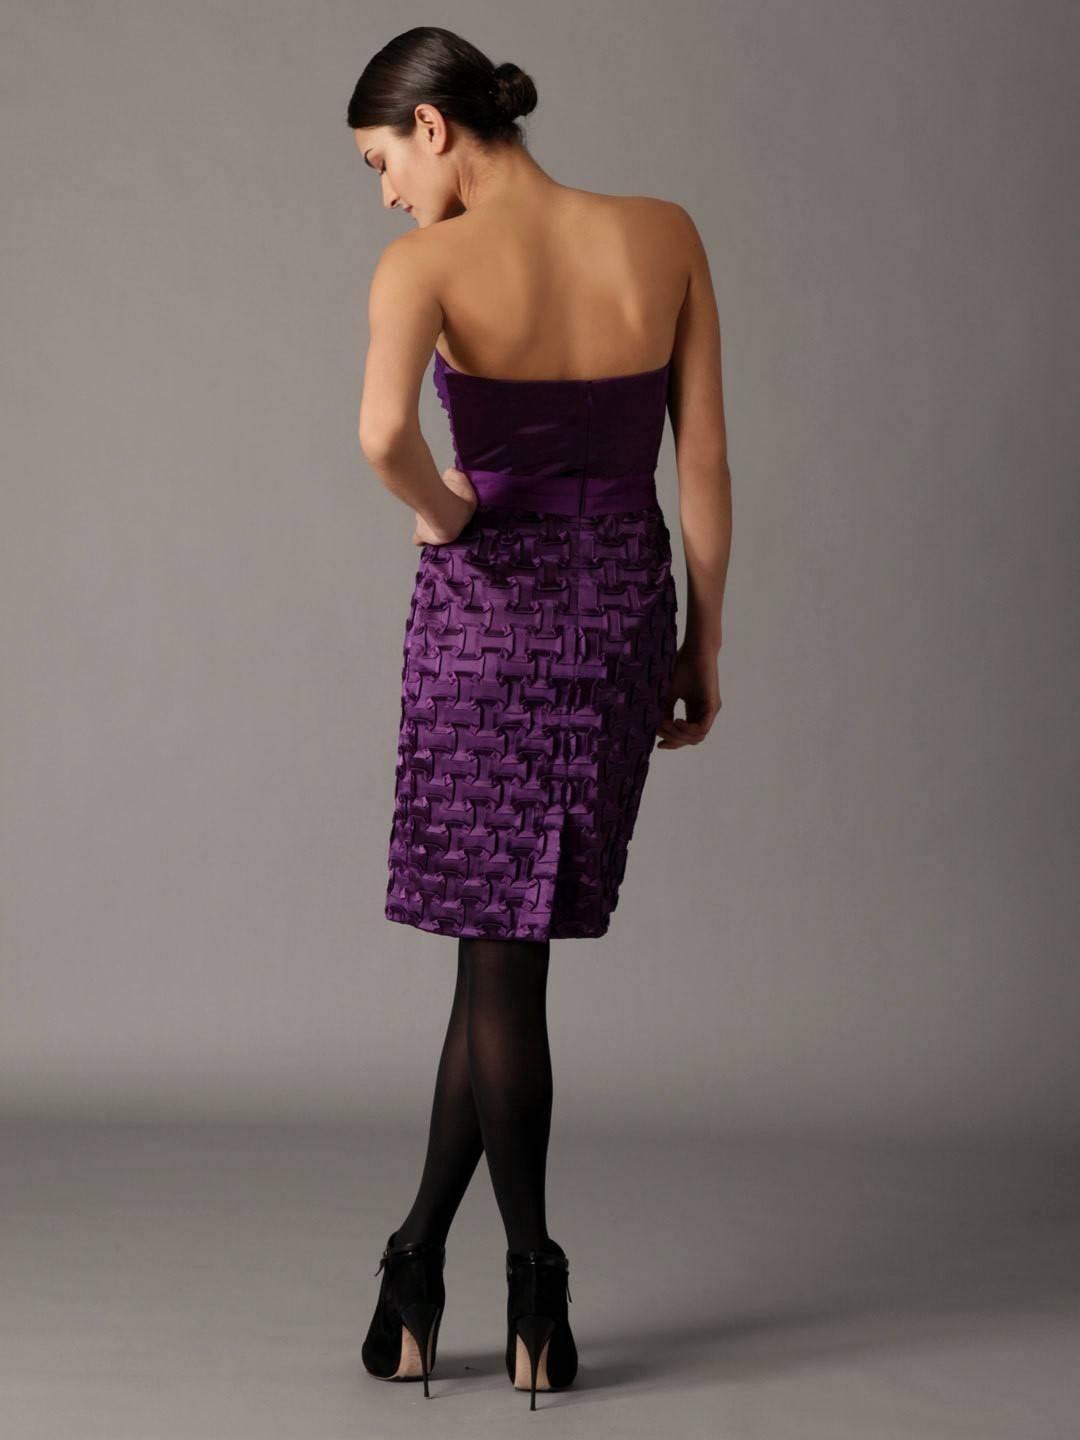 Women's New Vivienne Tam Collection Couture Cocktail Evening Dress Sz 4